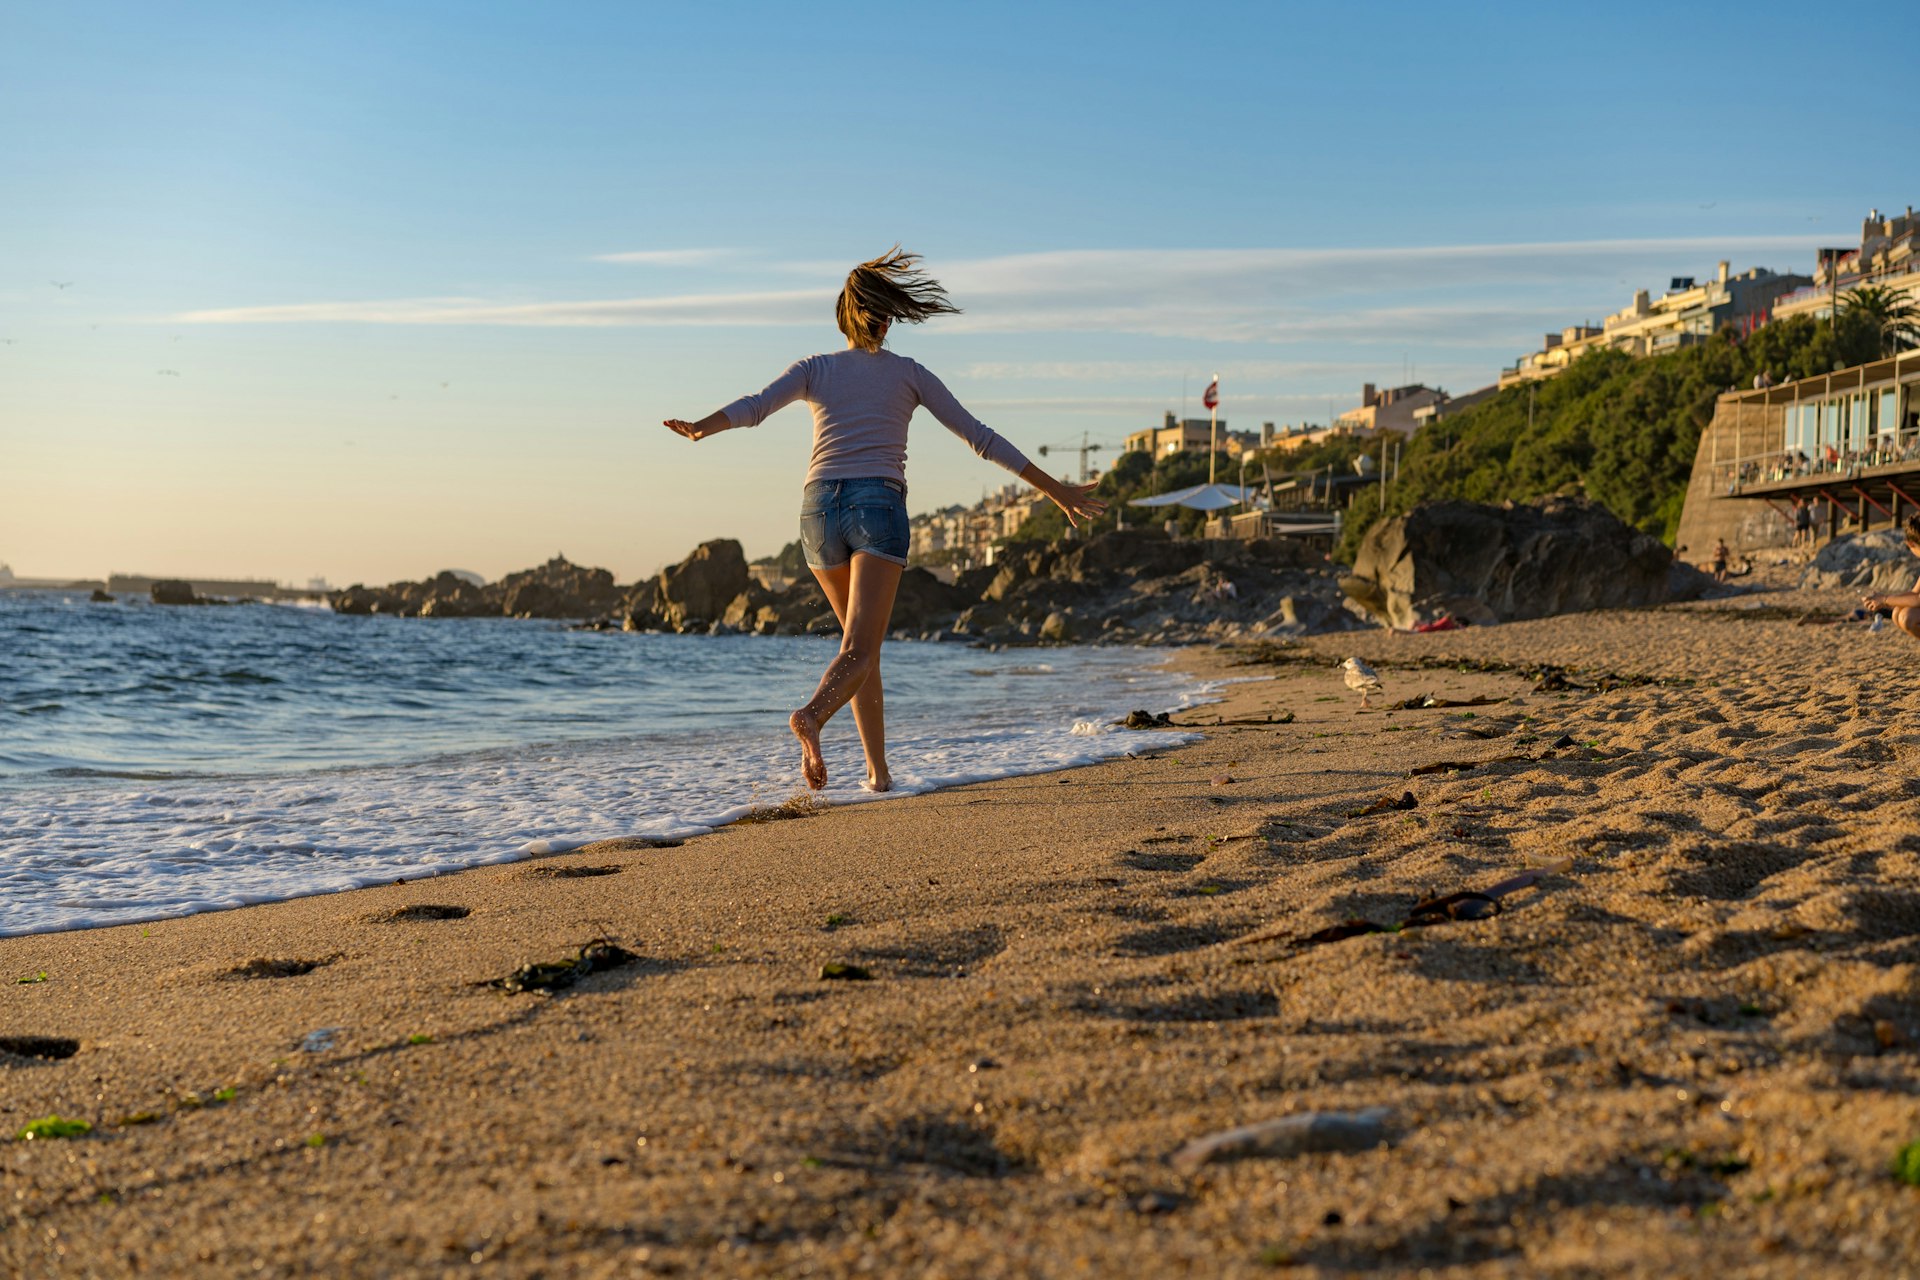 A young woman runs along a sandy beach on a sunny day